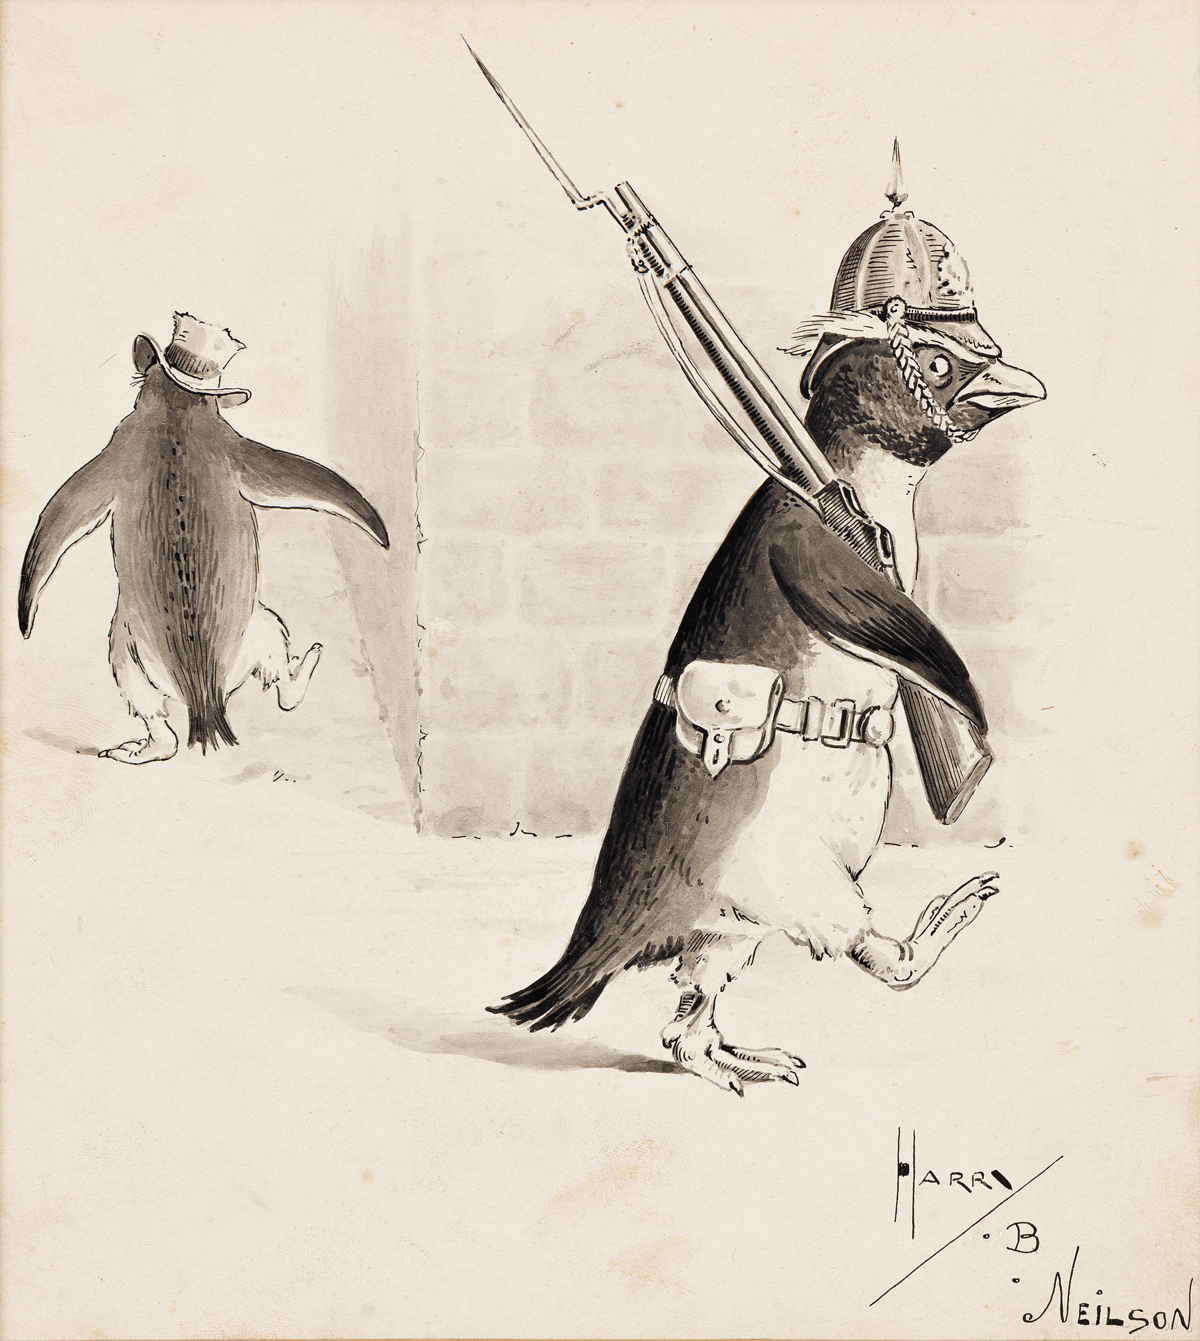 HARRY B. NEILSON (1861-1941) The Penguin Brigade. [CHILDRENS]